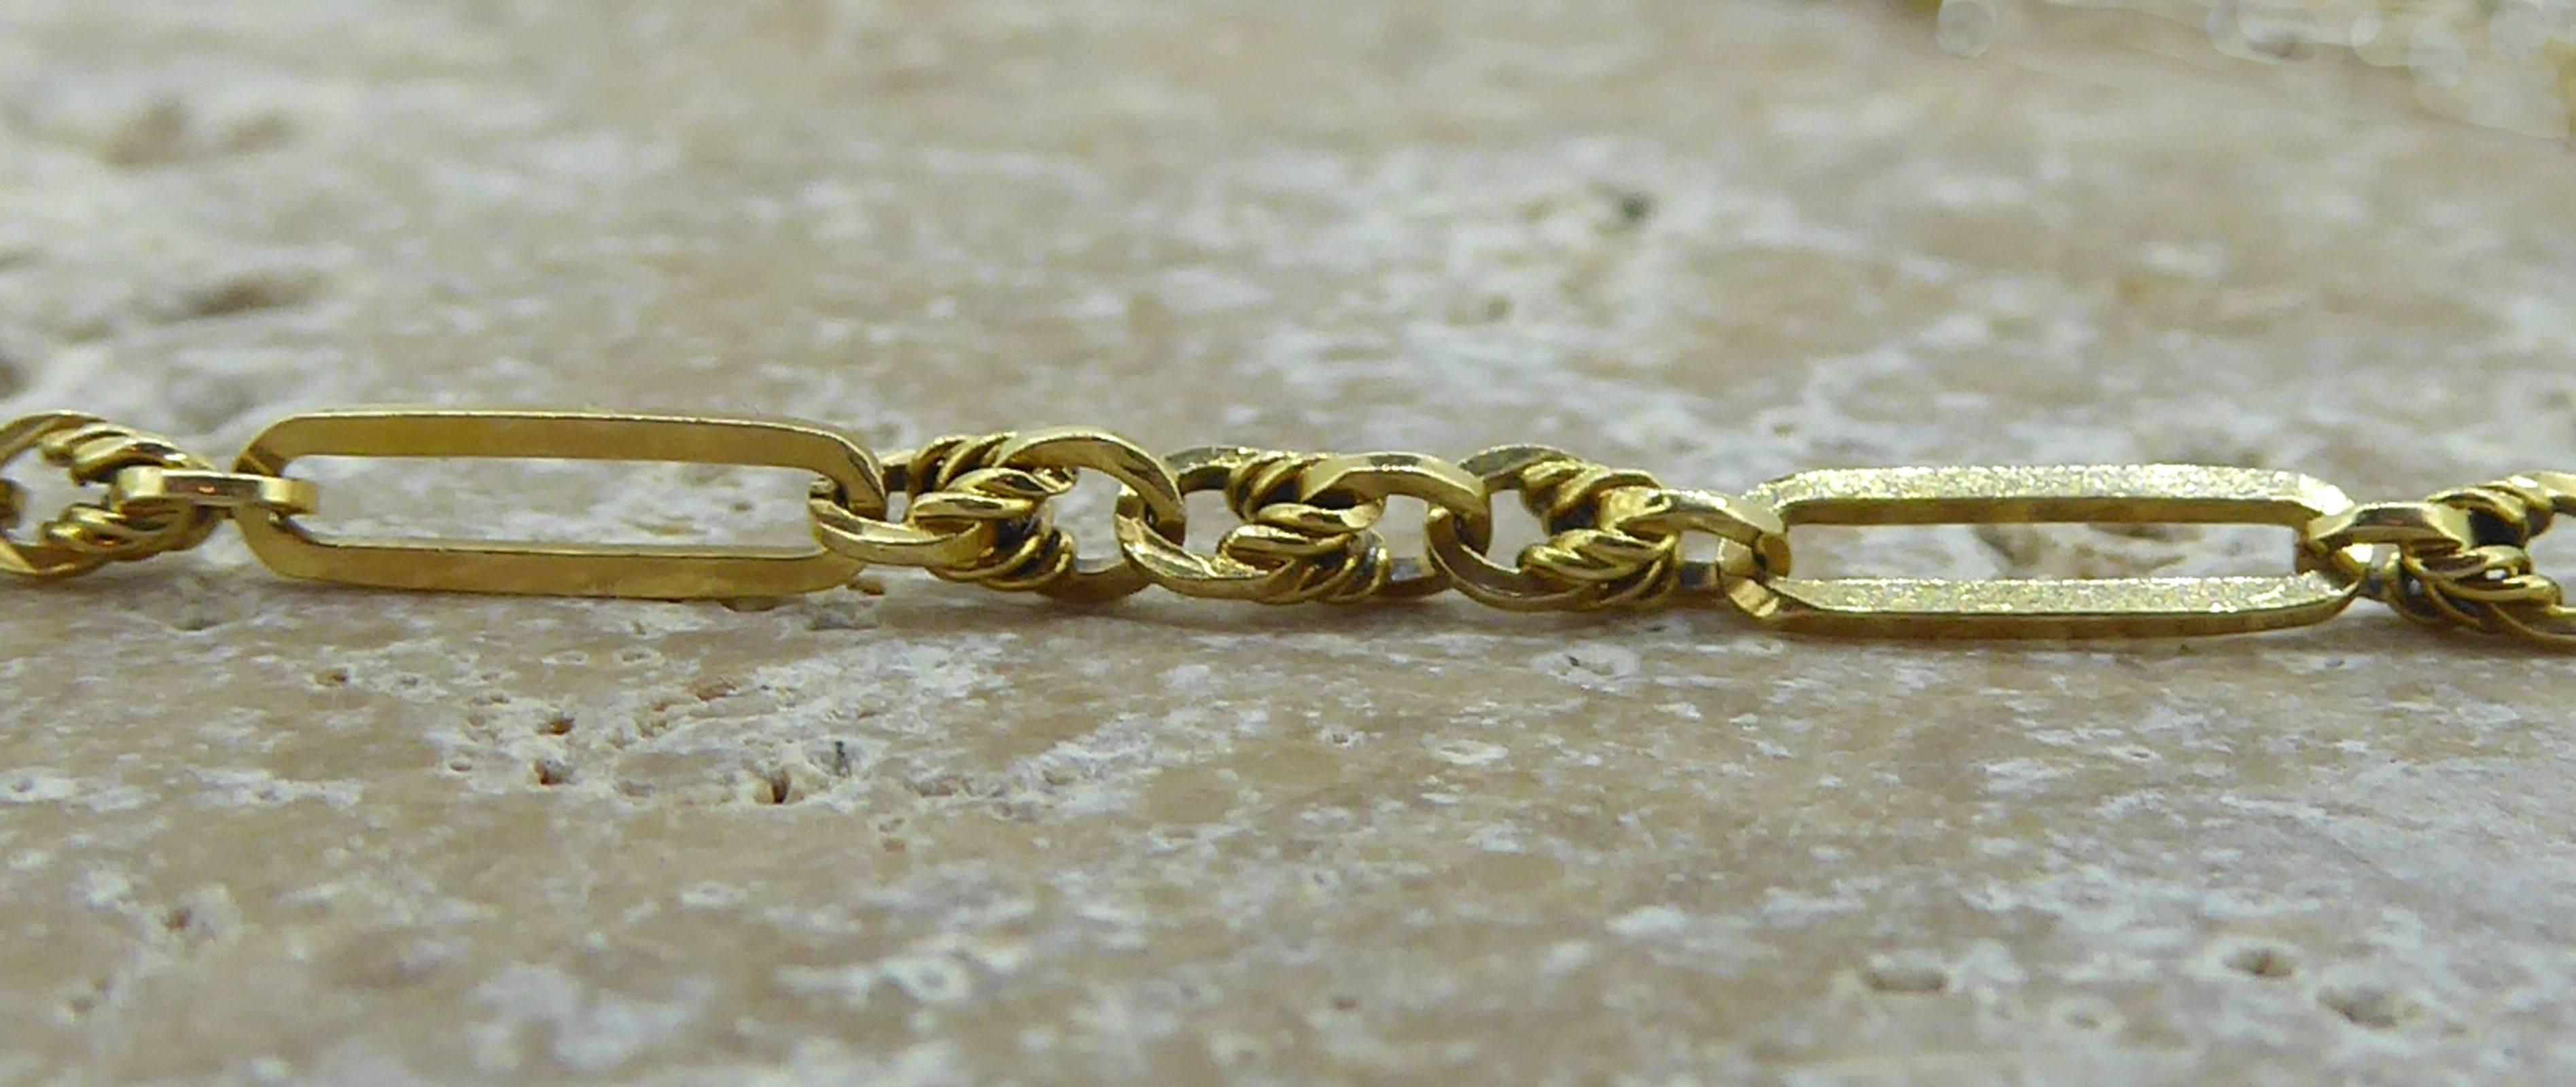 Women's Antique Victorian Muff Chain, Fancy Links, 18 Carat Yellow Gold